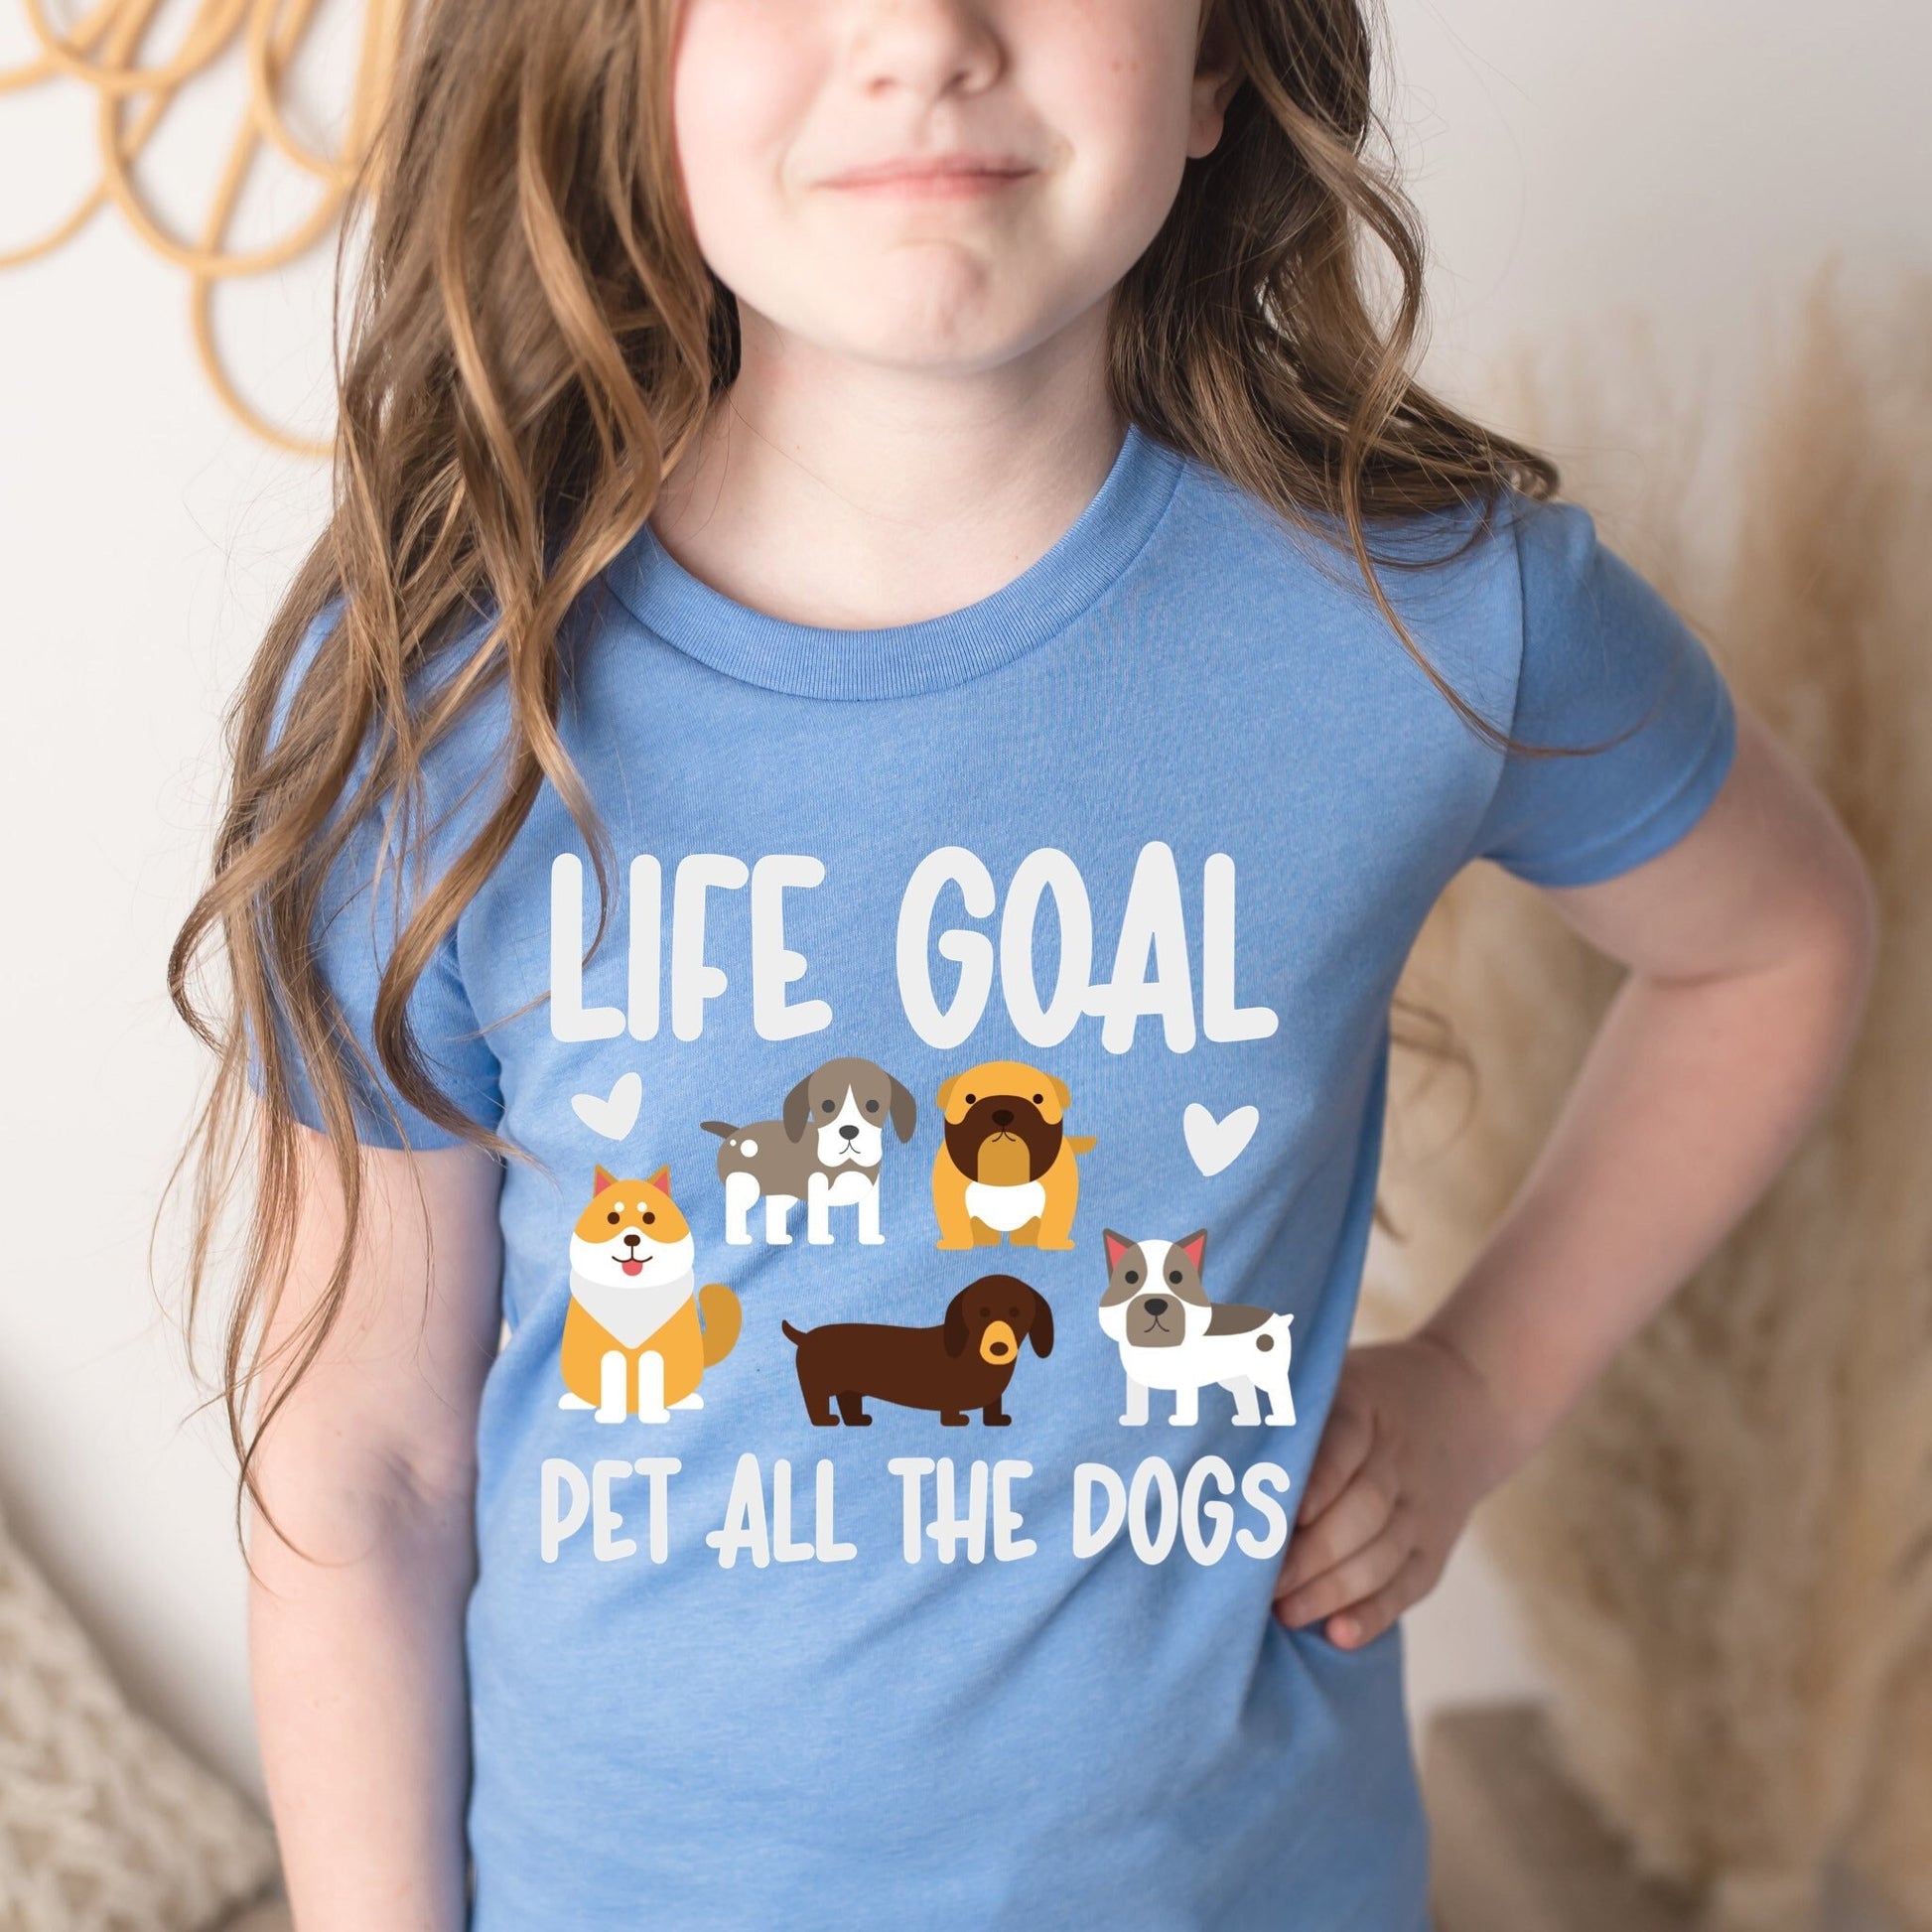 Life Goal Pet All The Dogs Shirt for Kids, Dog Shirt for Girls, Youth Shirt for Dog Lover, Life Goals Shirt, Animal Lover Gift Girl